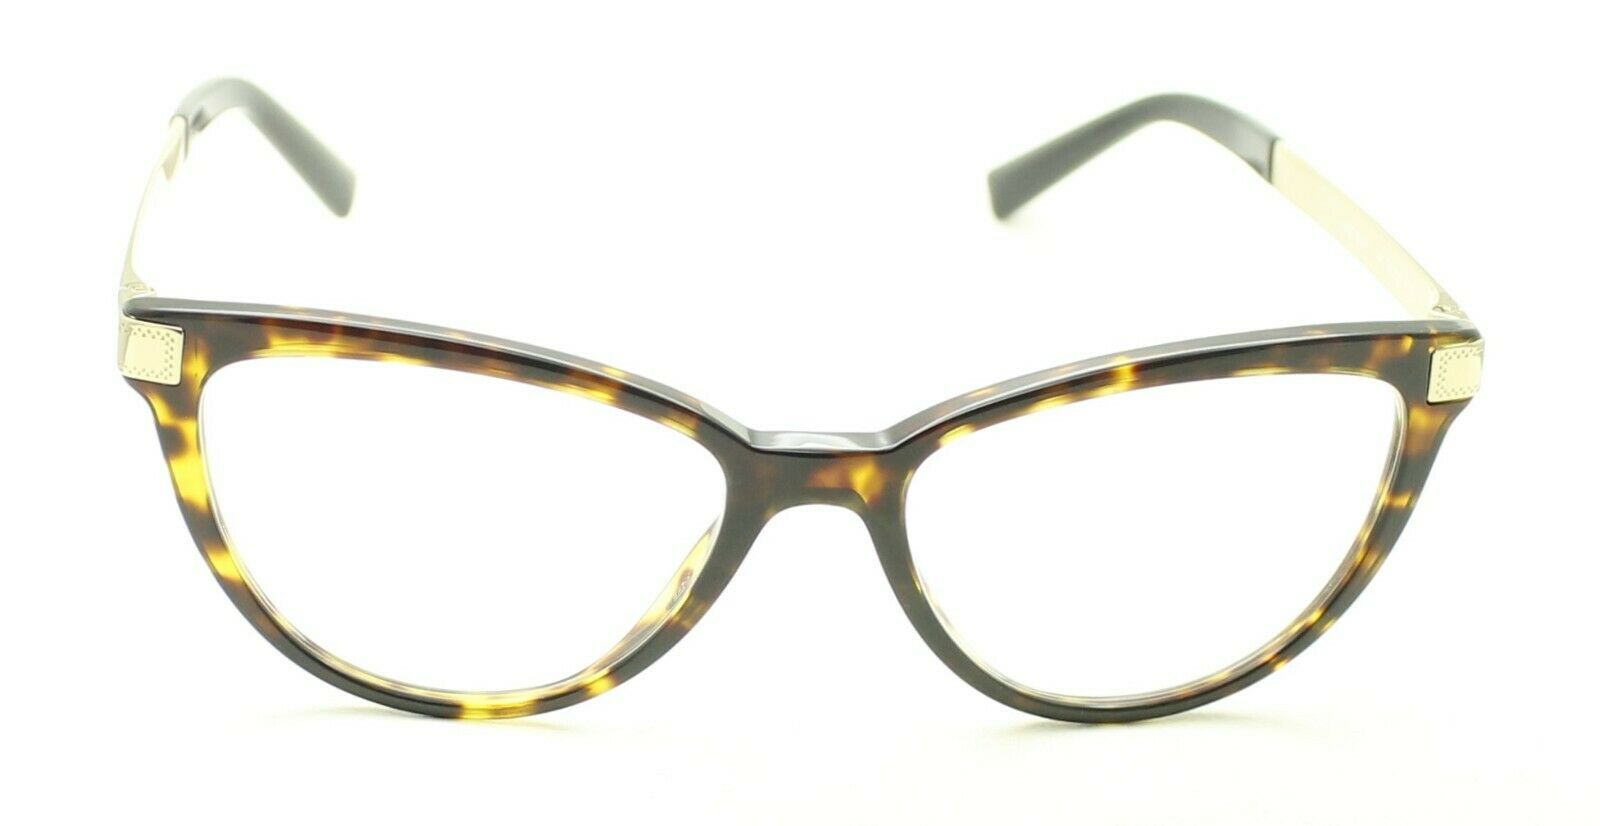 VERSACE 3271 108 52mm Eyewear FRAMES Glasses RX Optical Eyeglasses New - Italy